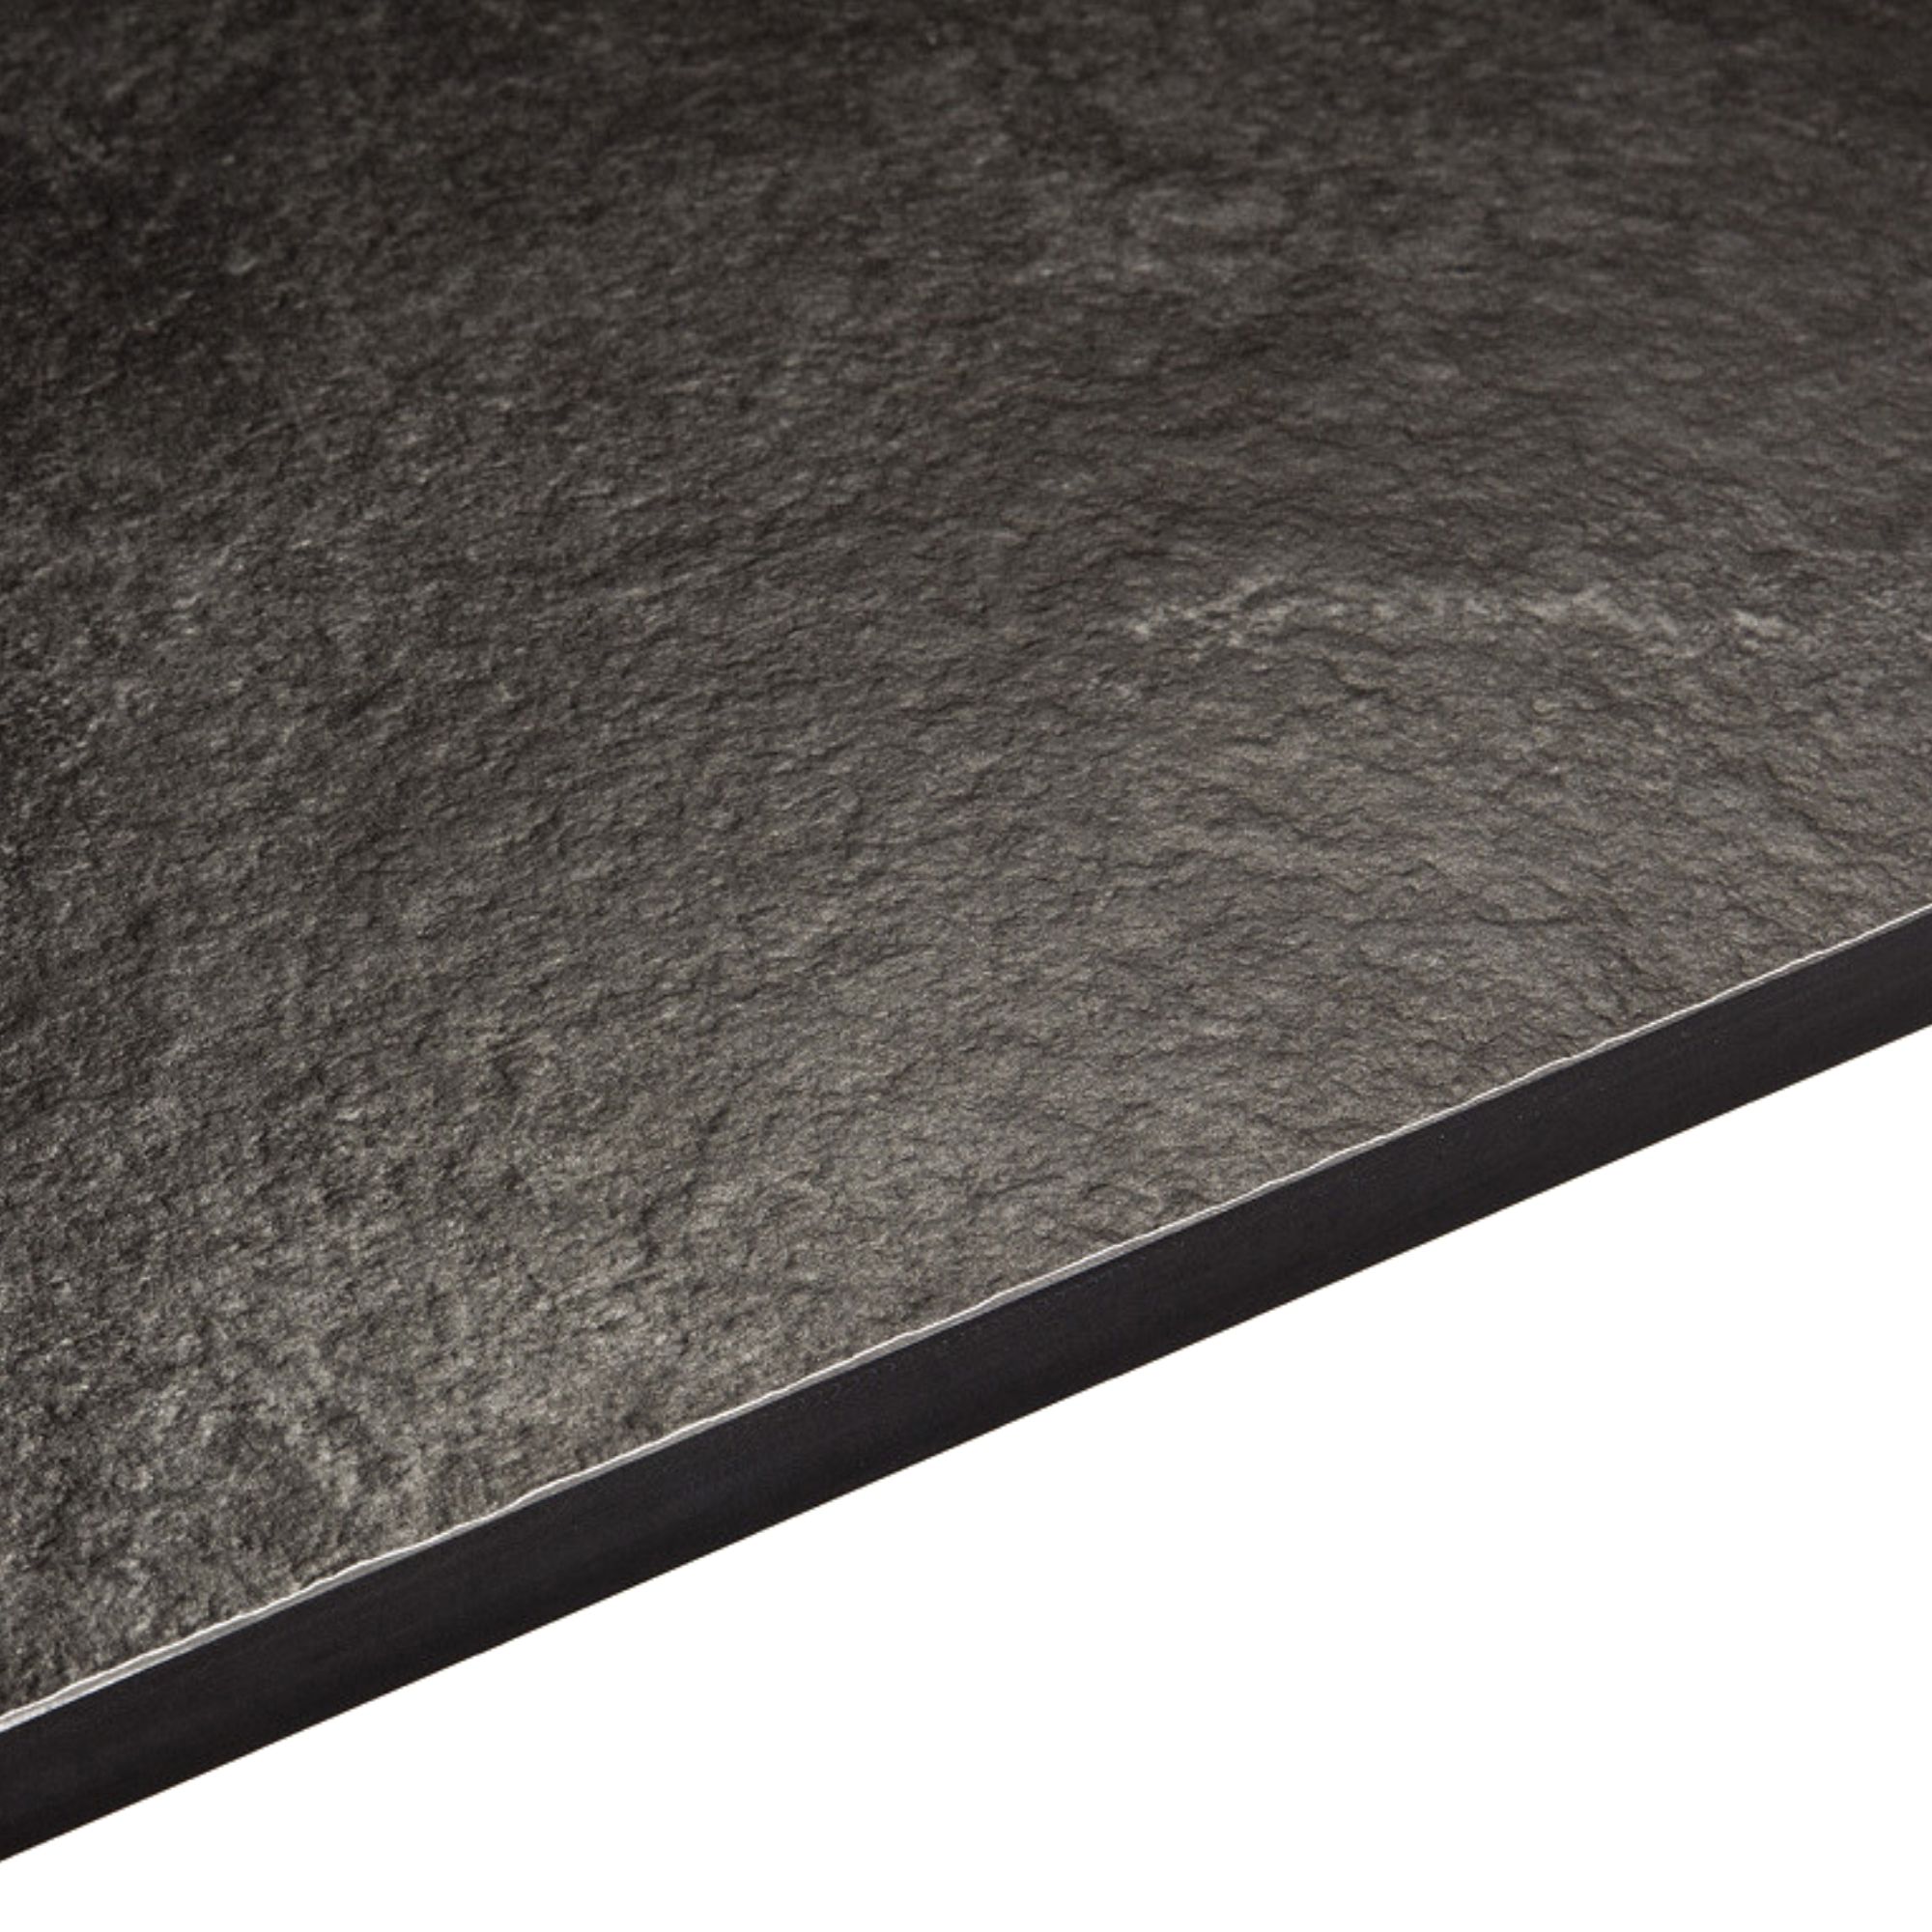 12.5 Zinc Argente Black Stone effect Worktop Worktop, (L)3020mm